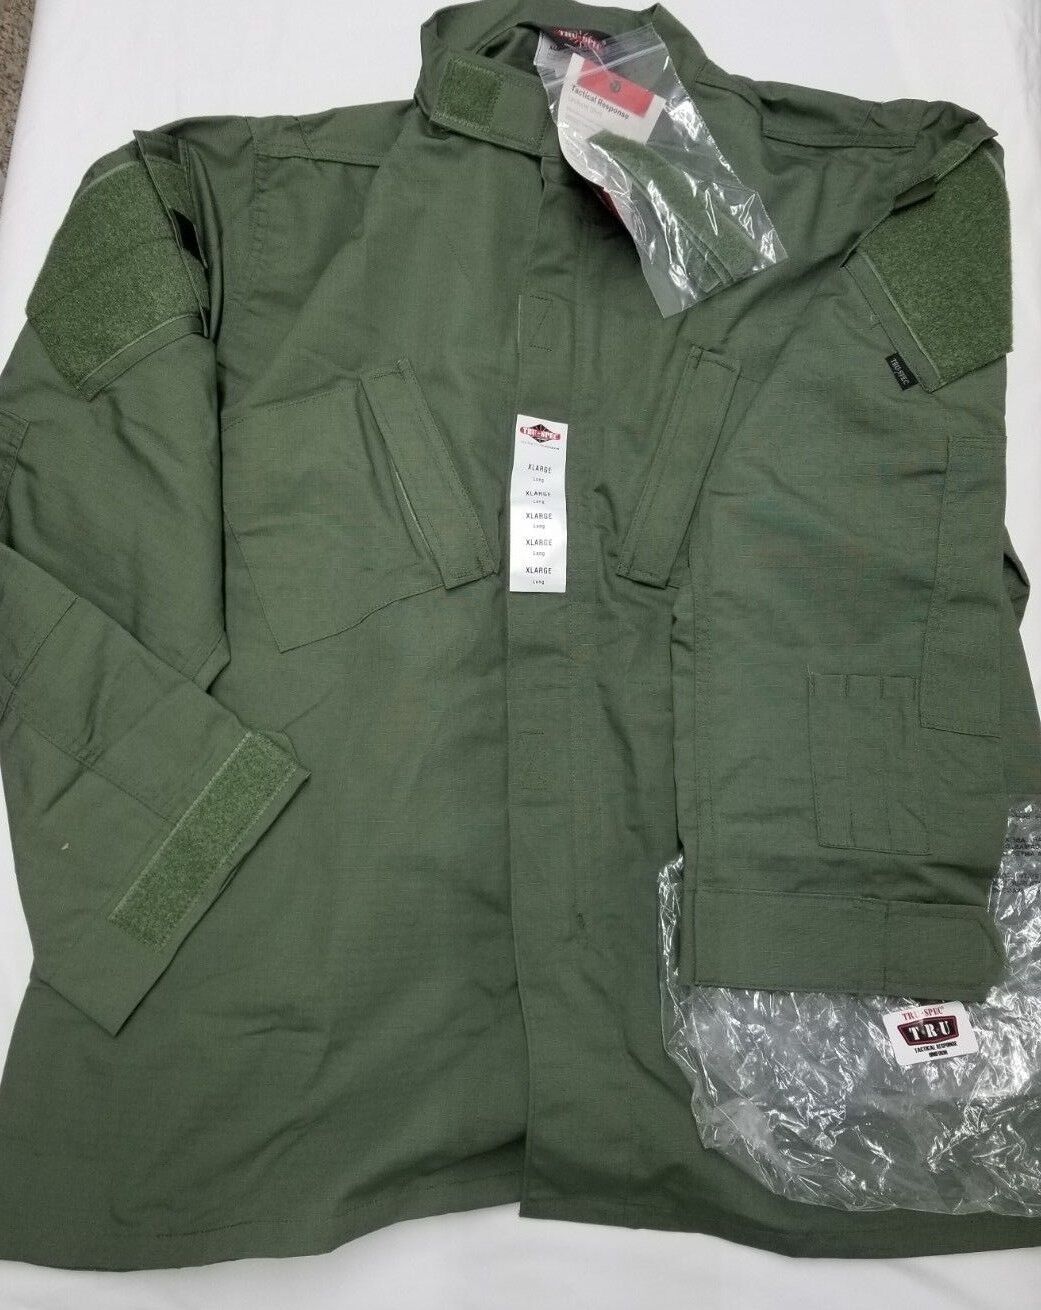 Tru Spec Tactical Response Shirt Olive Drab Green 1284 | eBay